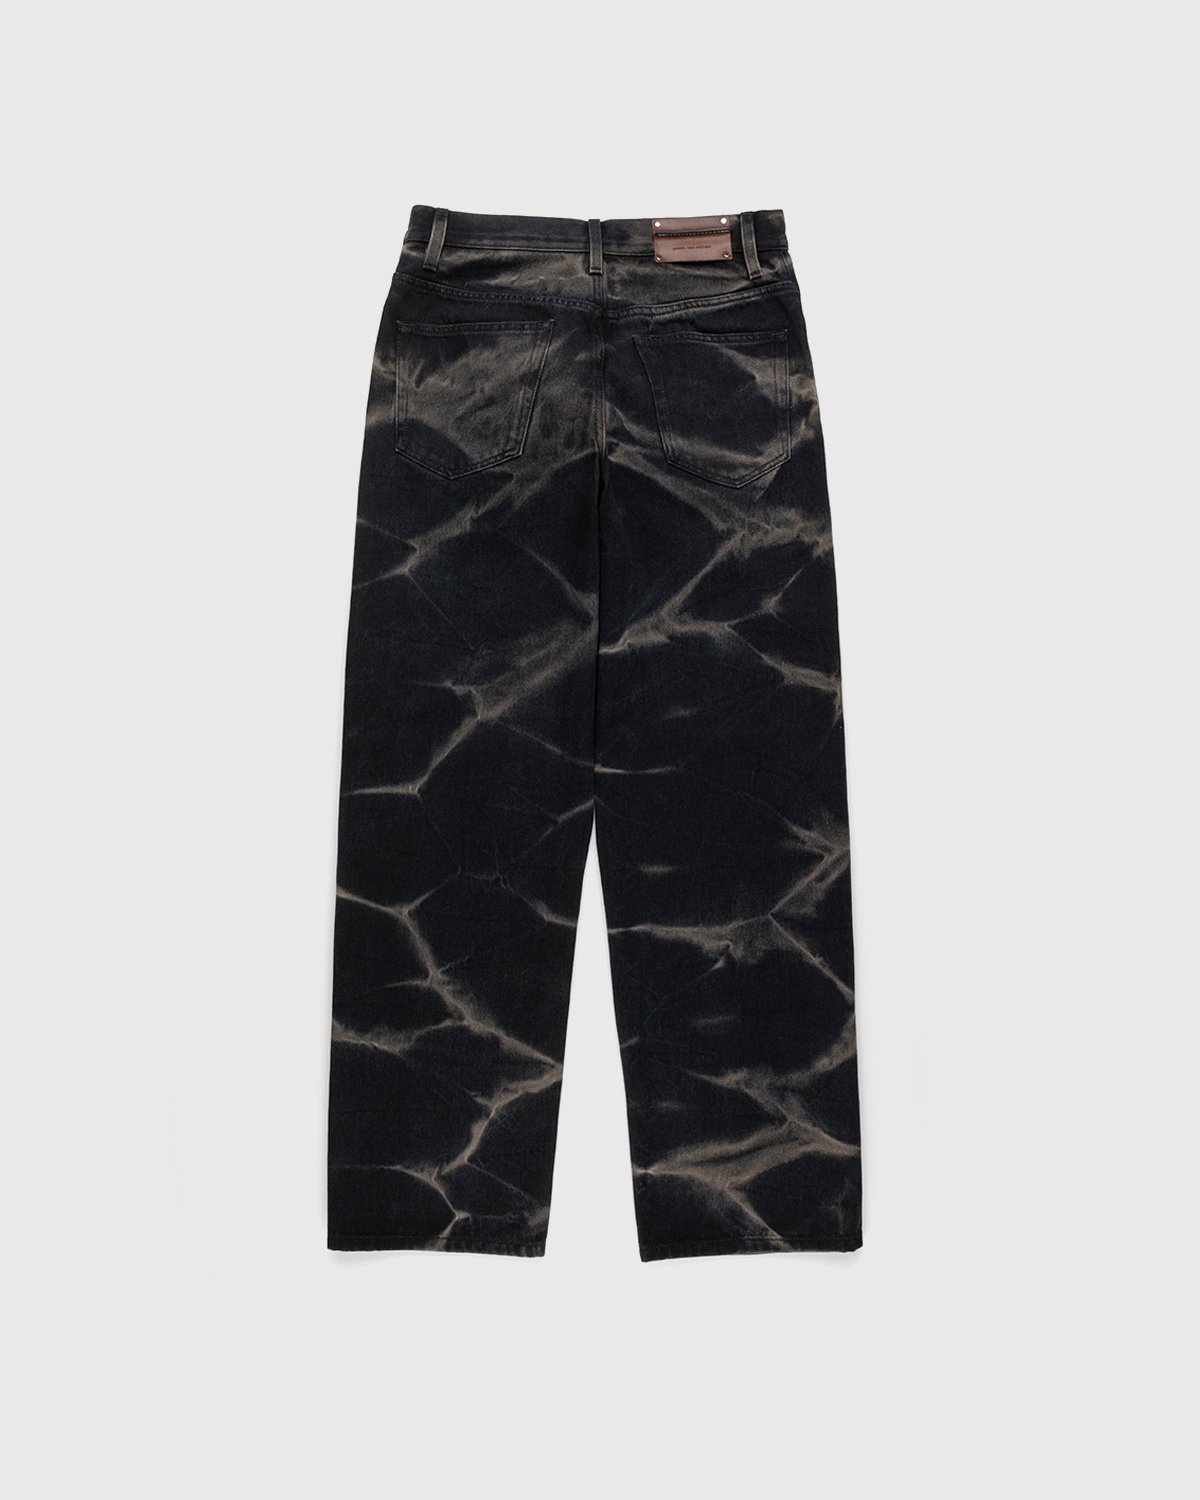 Dries van Noten – Pine Acid Wash Jeans Black - Pants - Black - Image 2